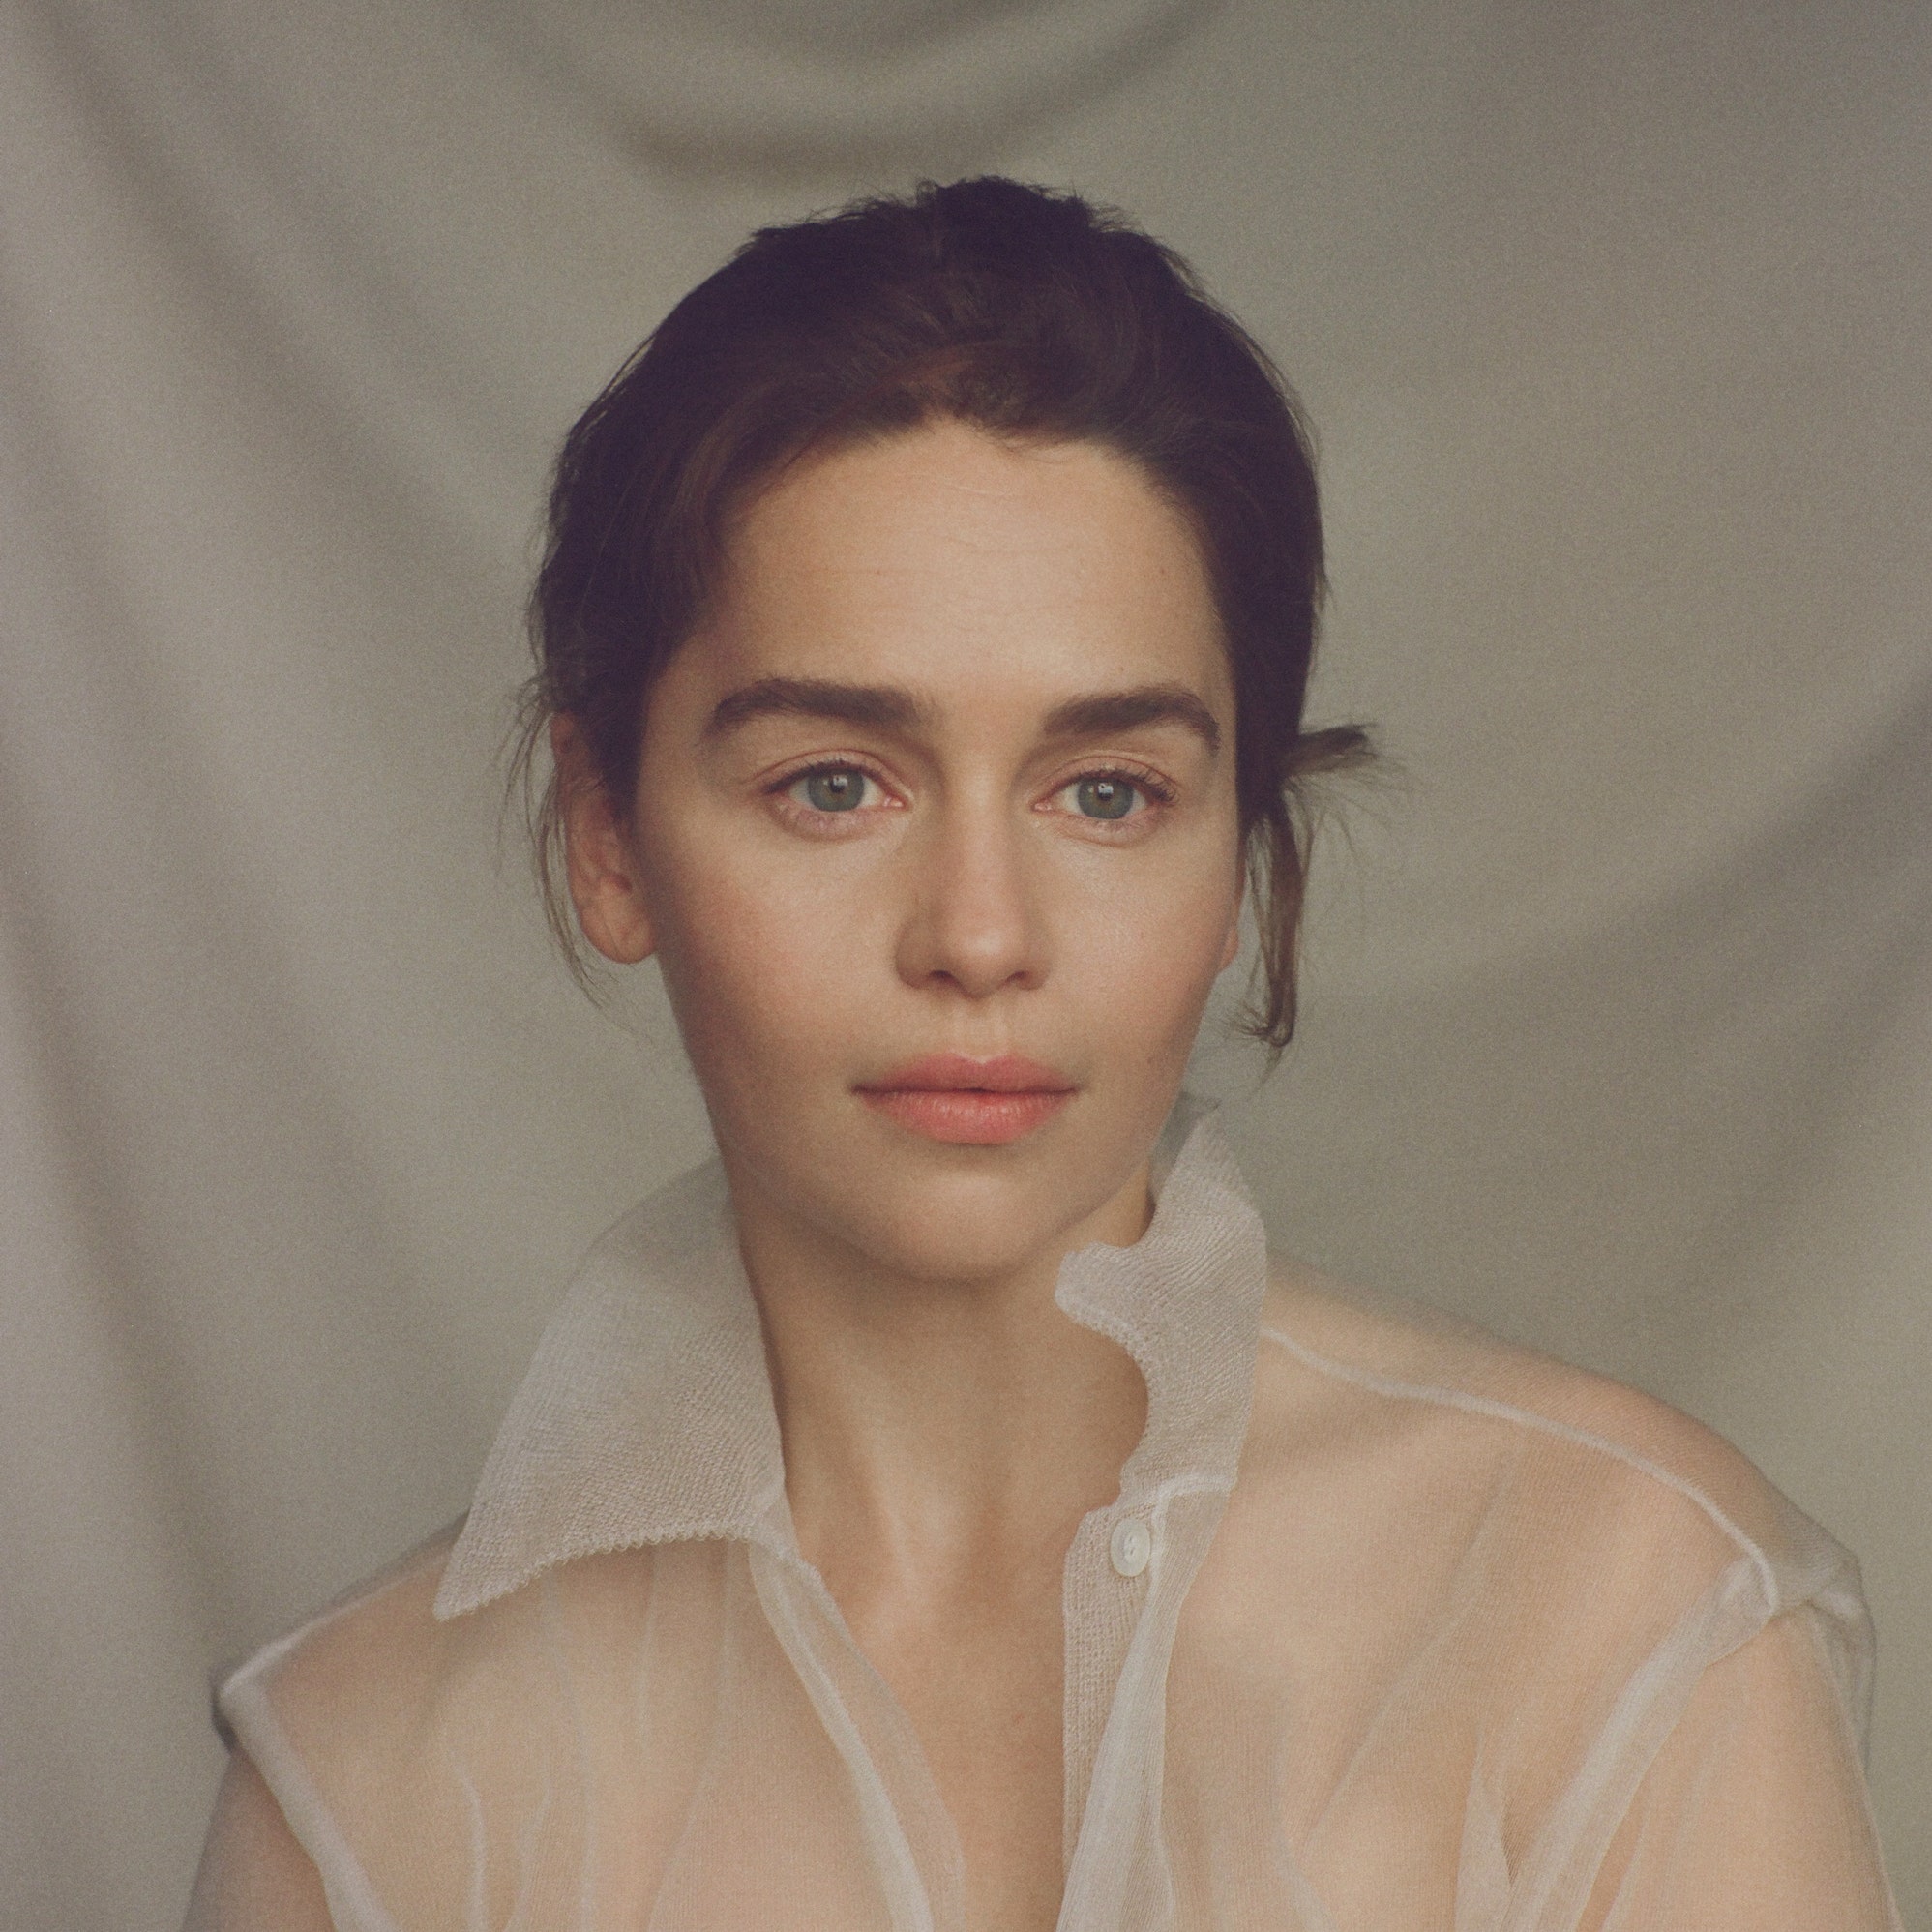 Emilia Clarke Portrait 2019 Wallpapers